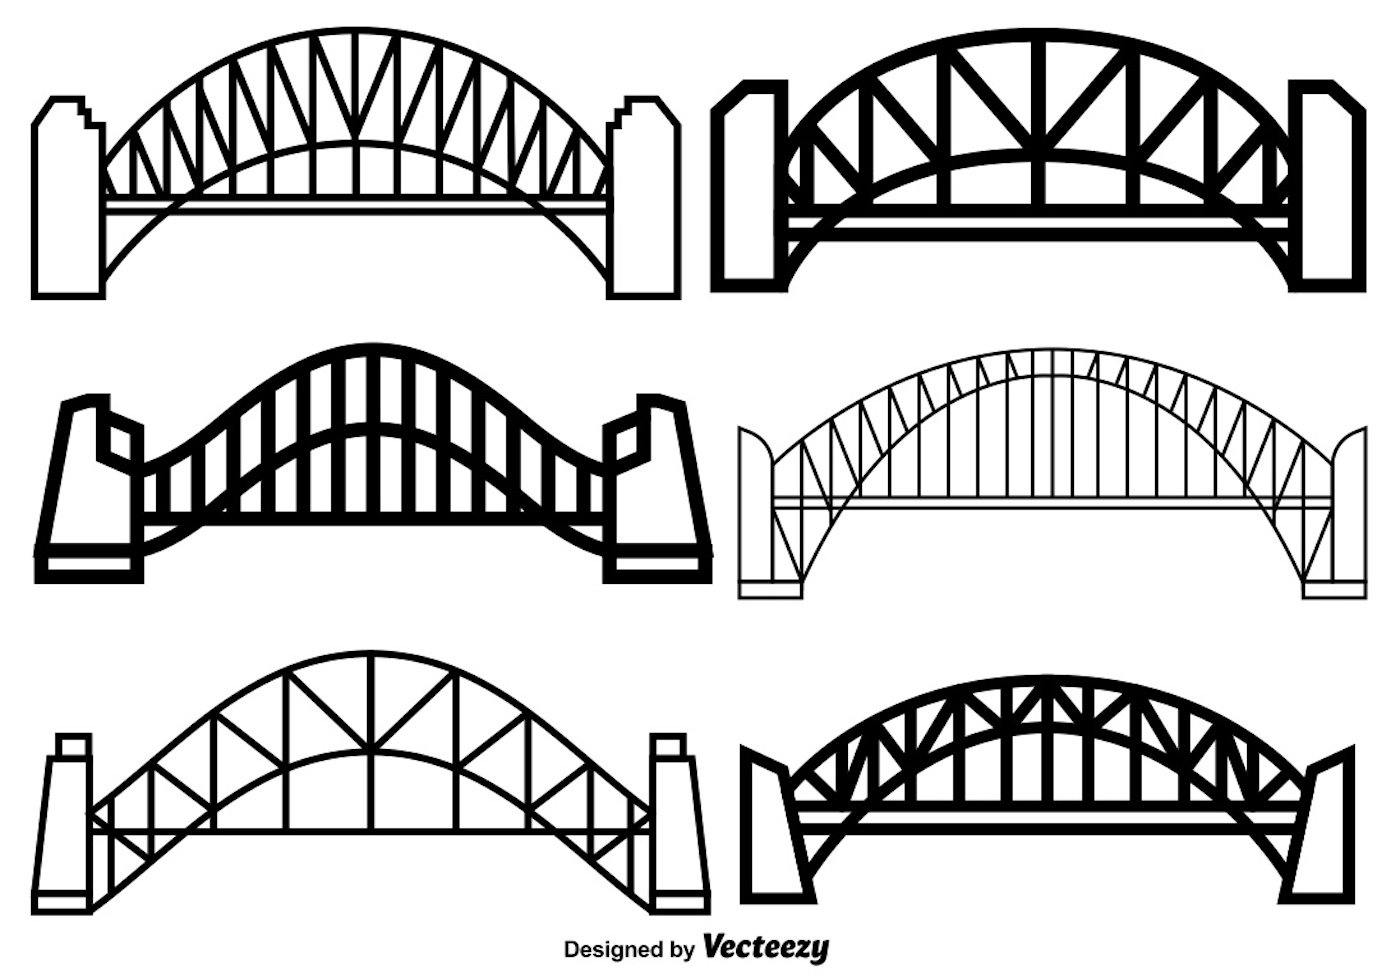 Download Vector Set Of Harbour Bridge Icons - Download Free Vectors, Clipart Graphics & Vector Art